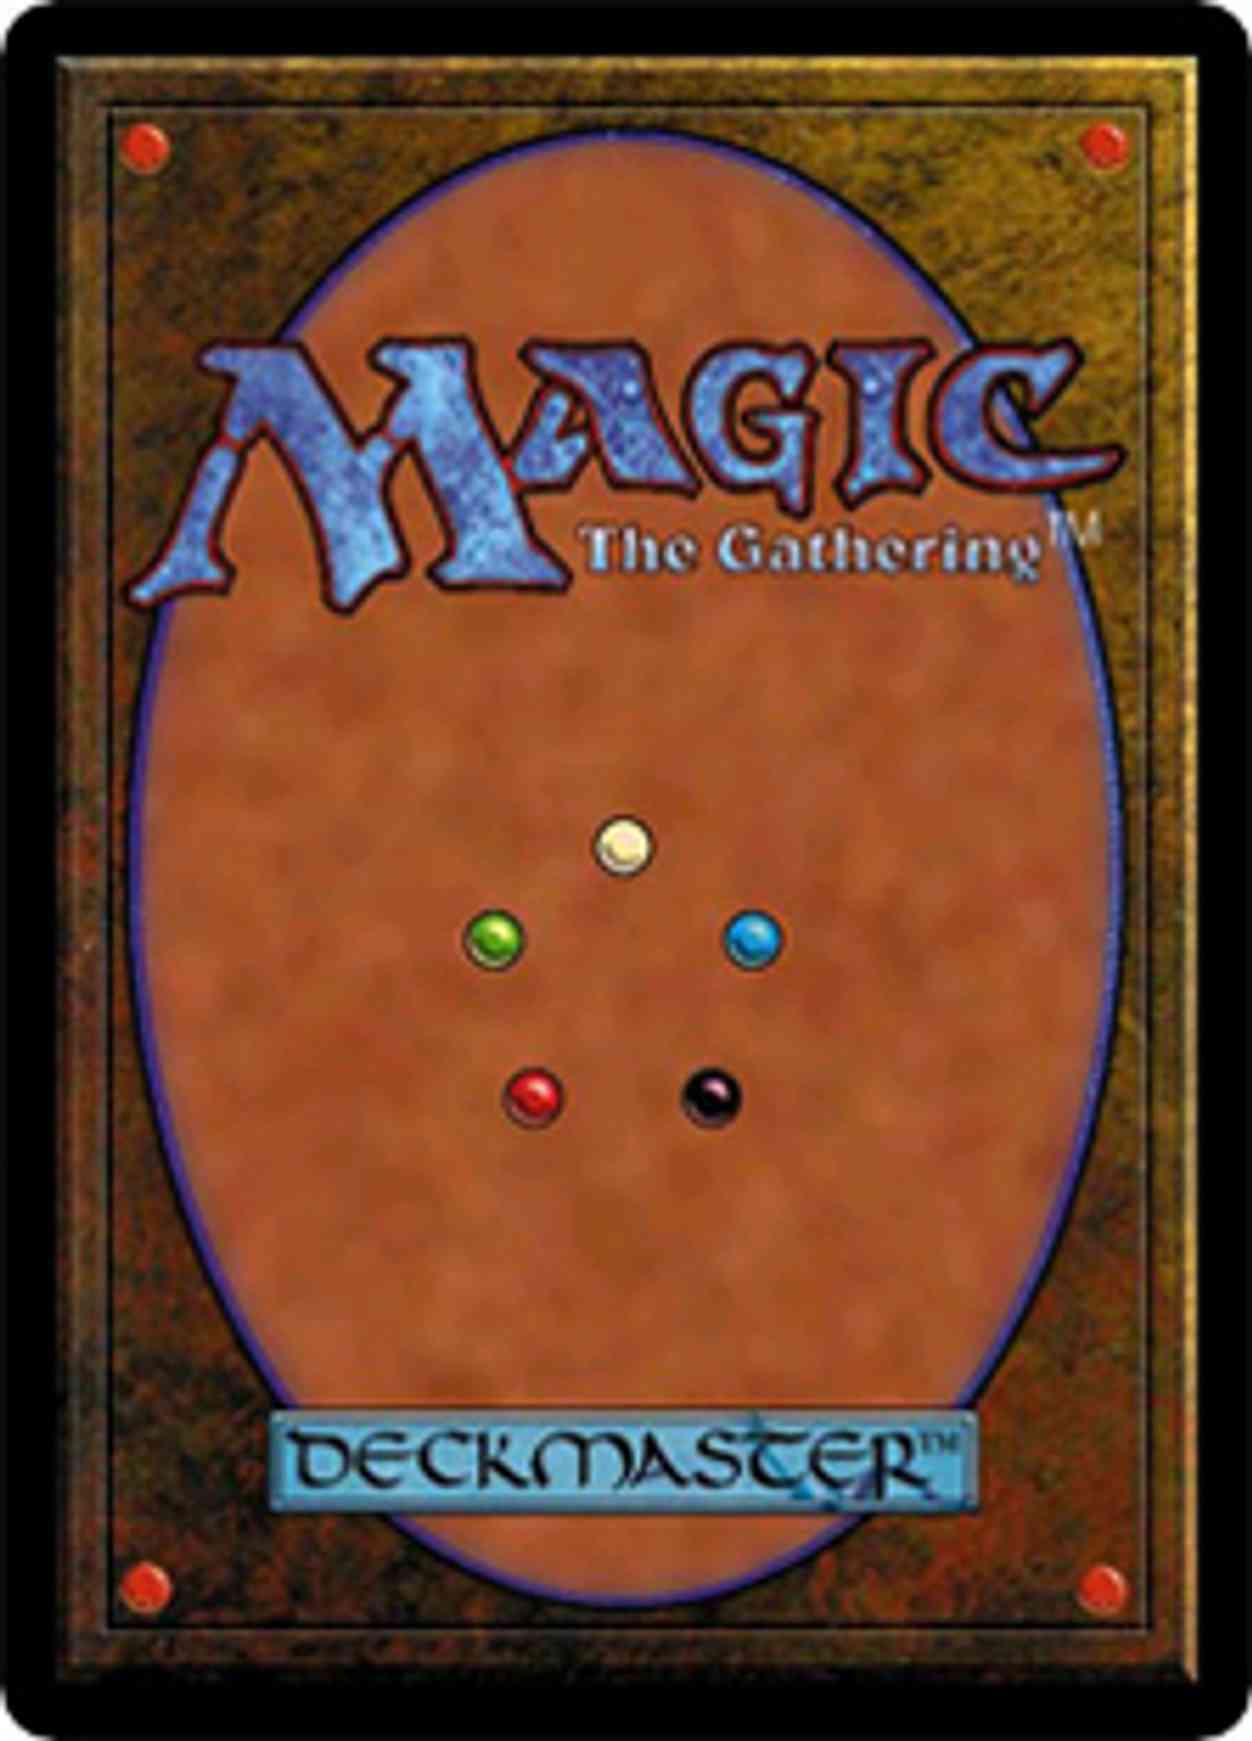 Avacyn's Pilgrim magic card front